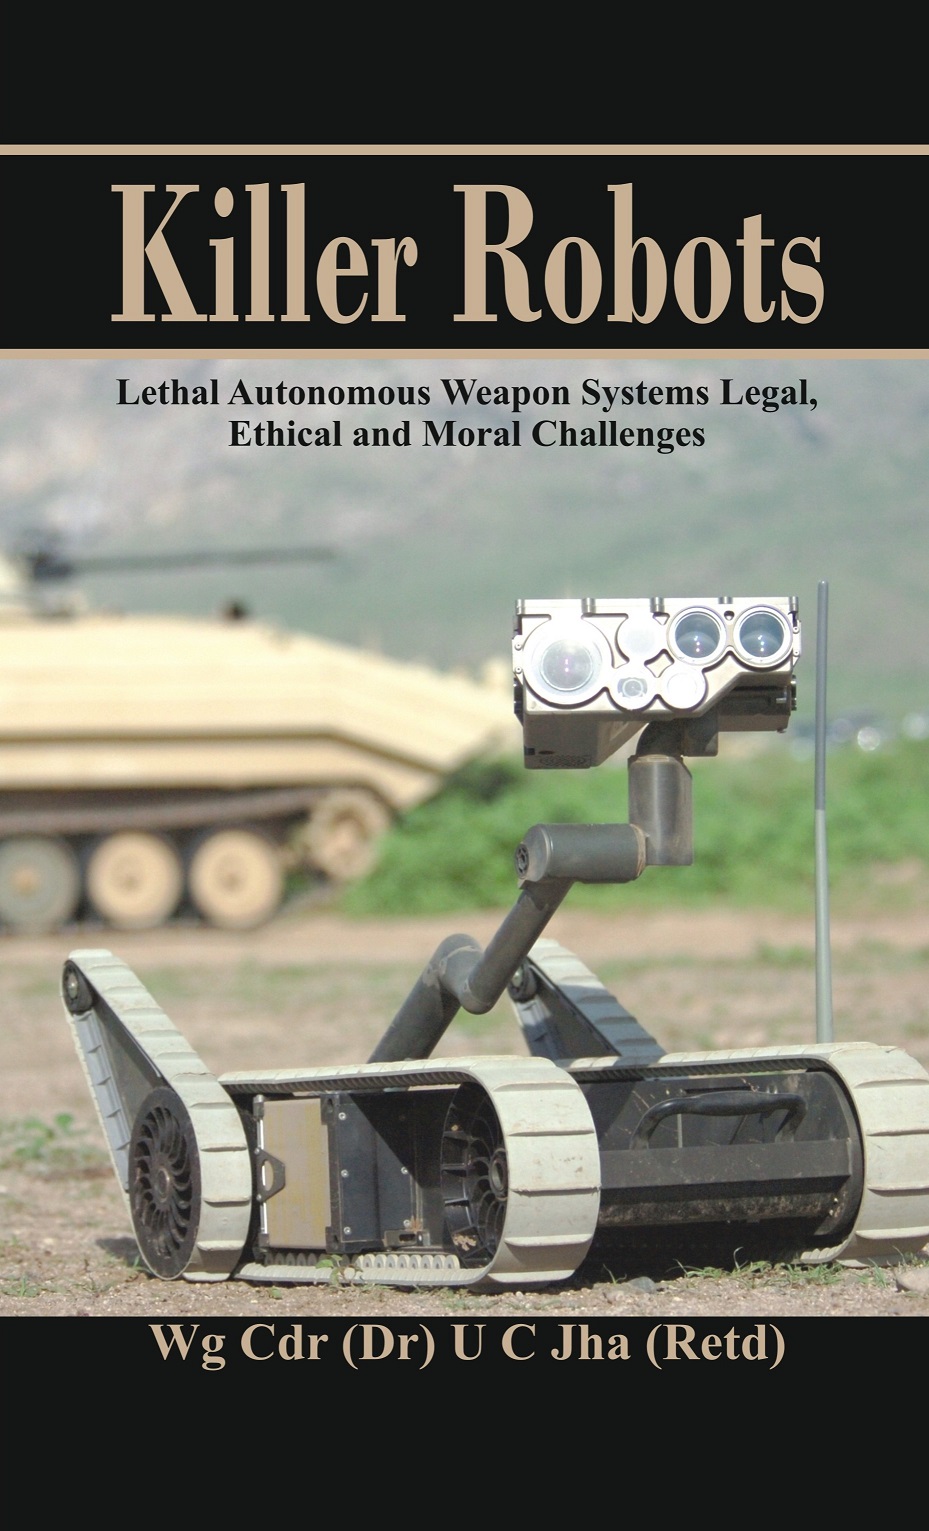 Killer Robots- Lethal Autonomous Weapon Systems Legal, Ethical and Moral Challenges